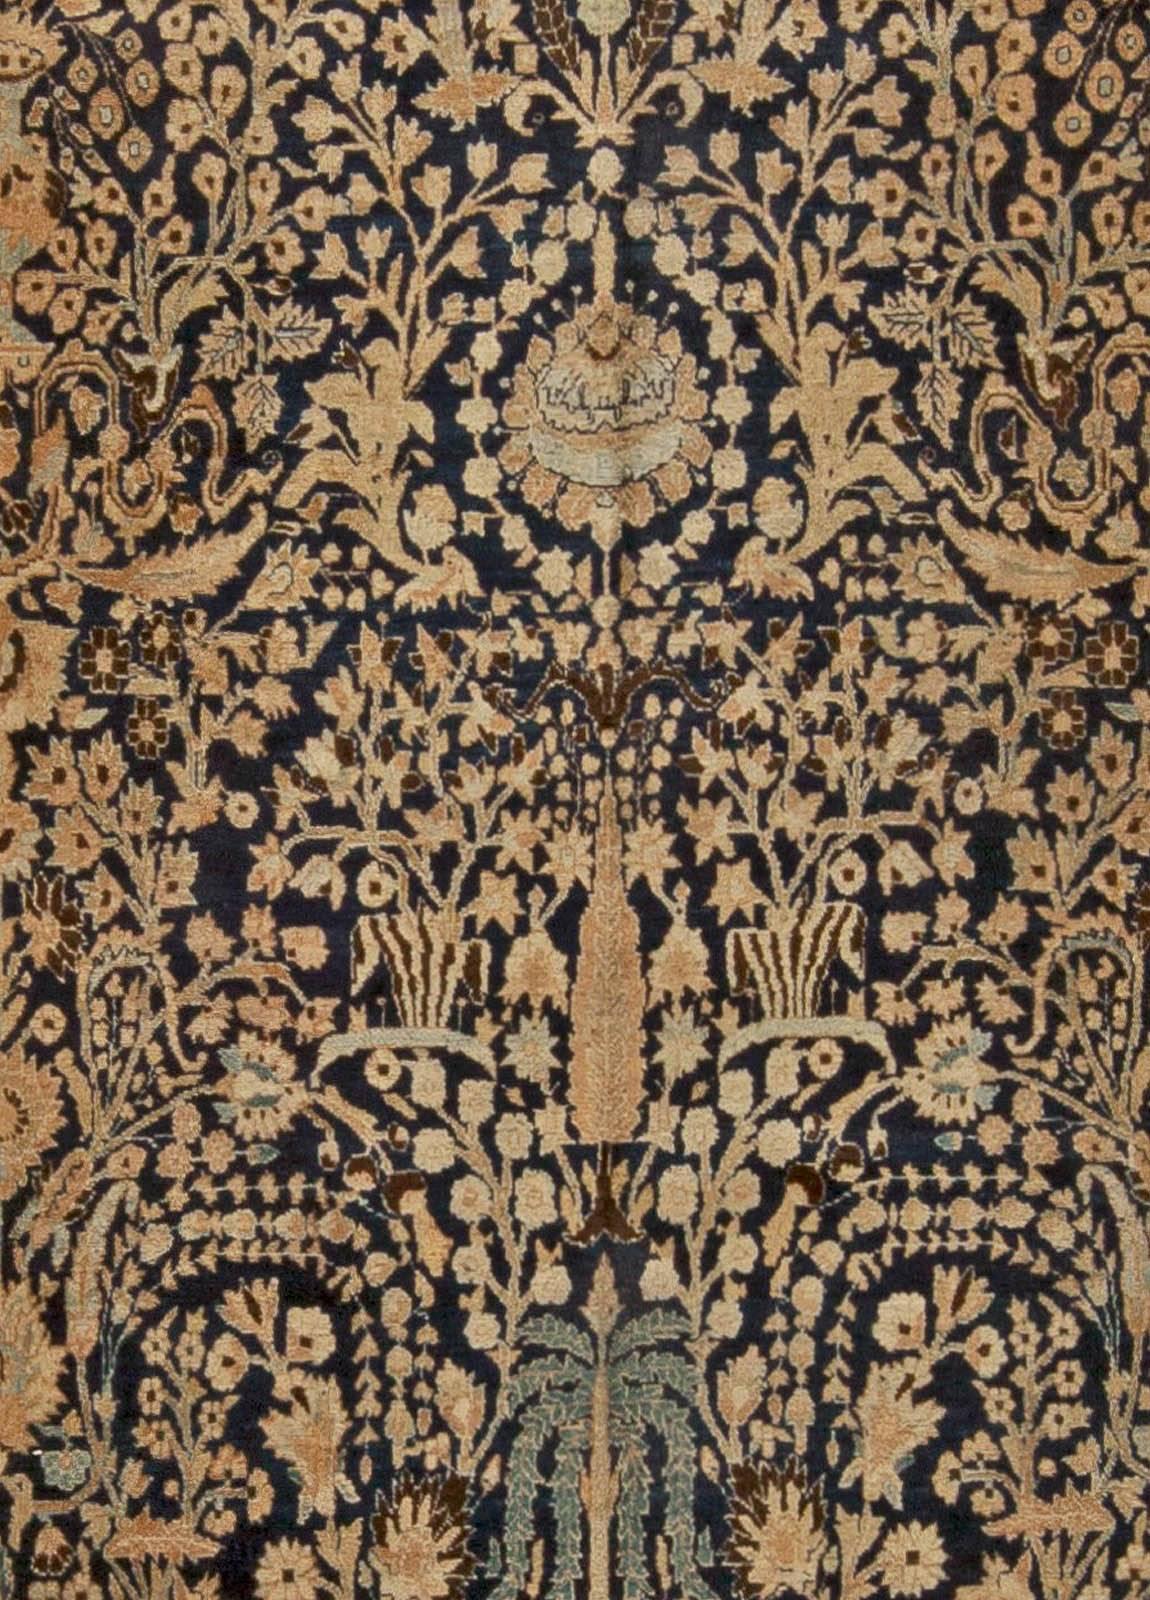 Fine Antique Persian Khorassan handmade wool rug
Size: 9'9